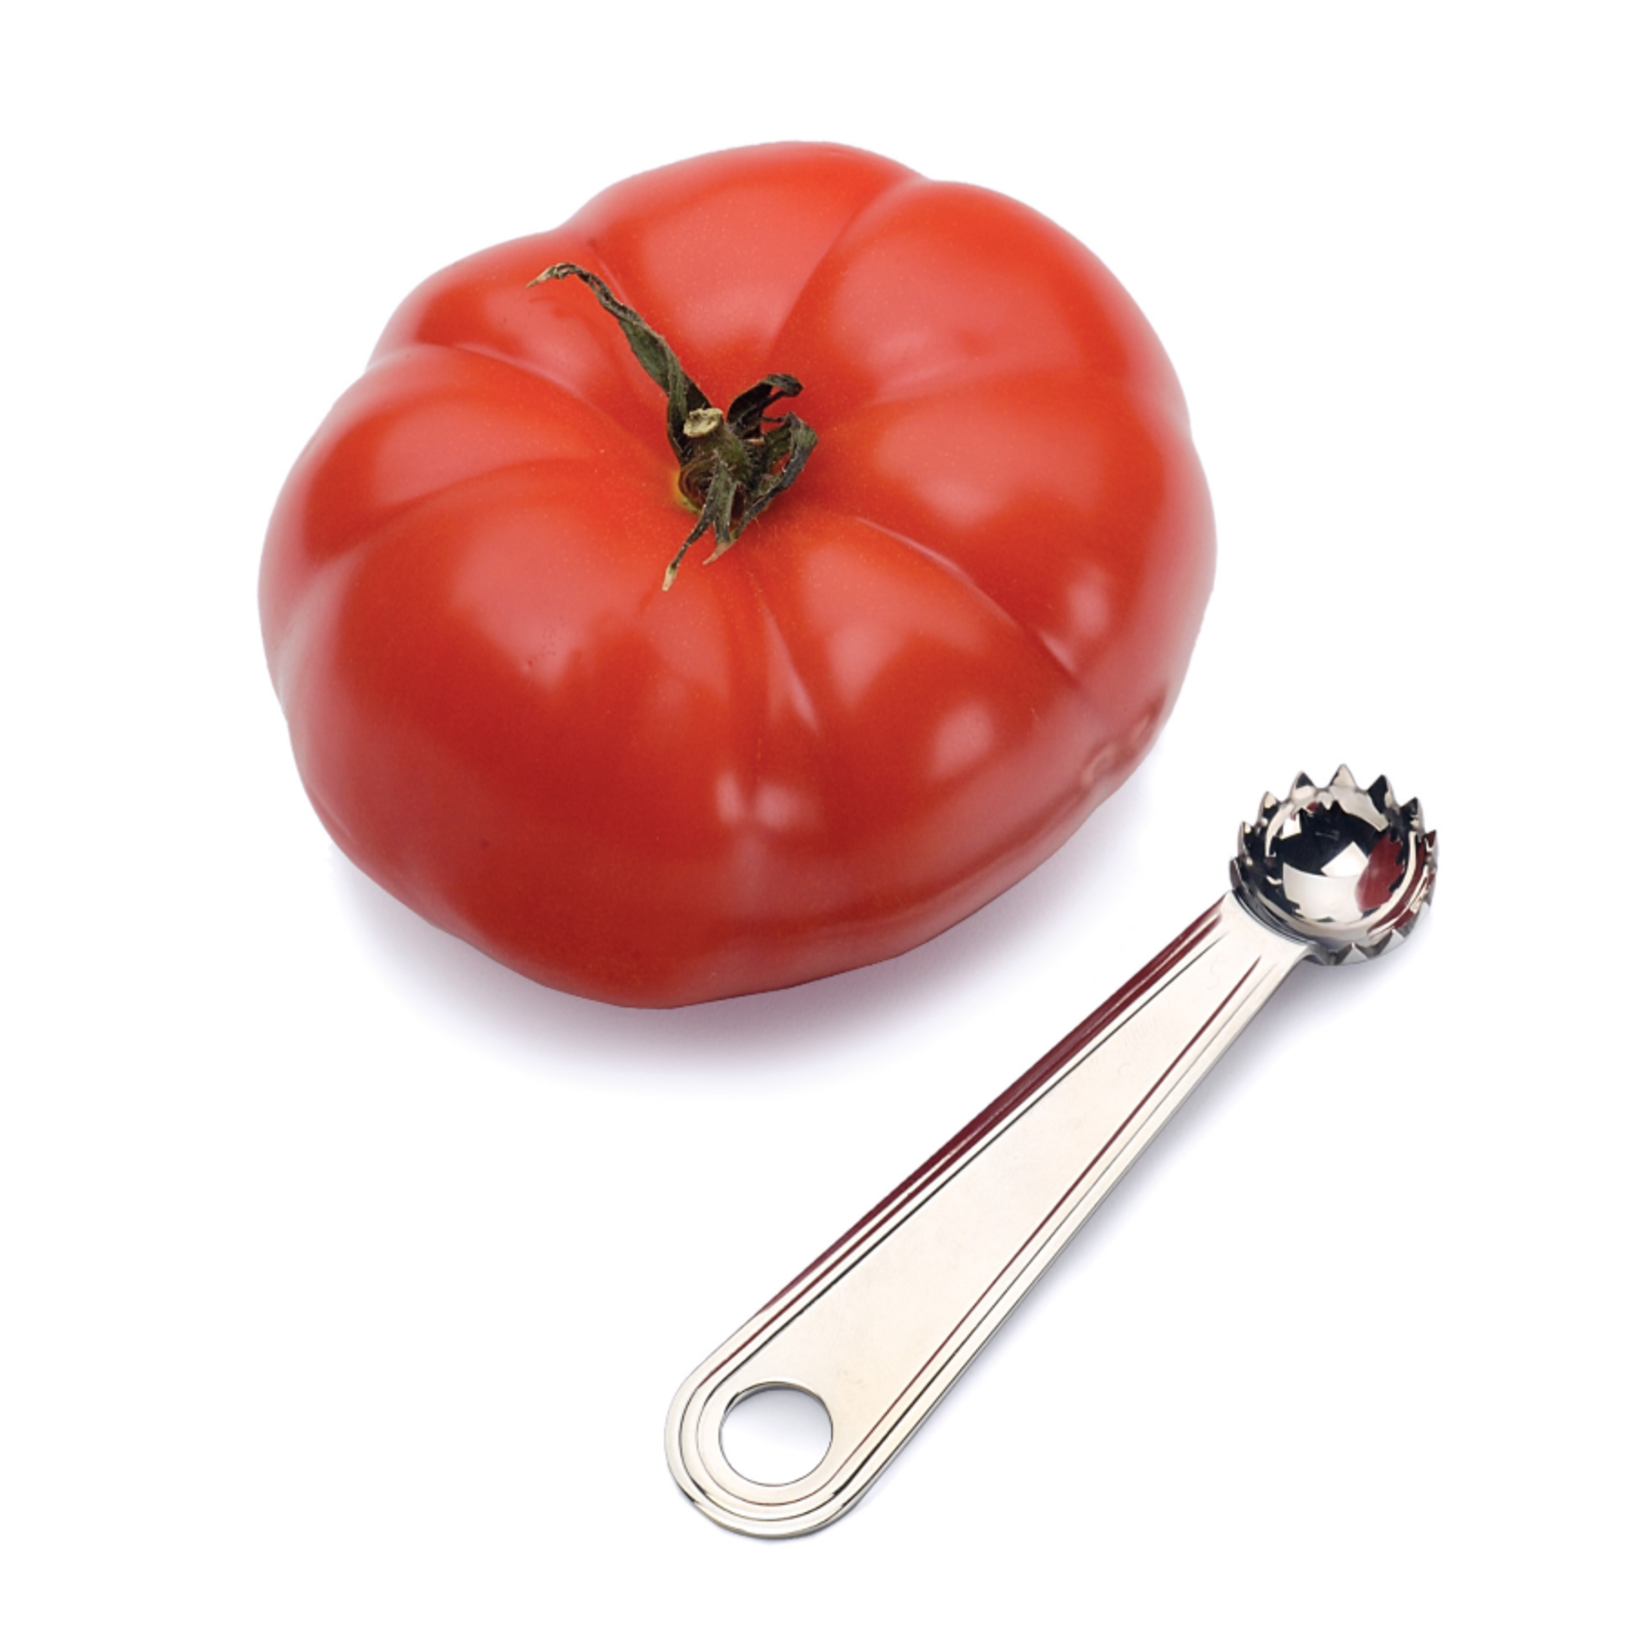 RSVP Tomato Huller - single